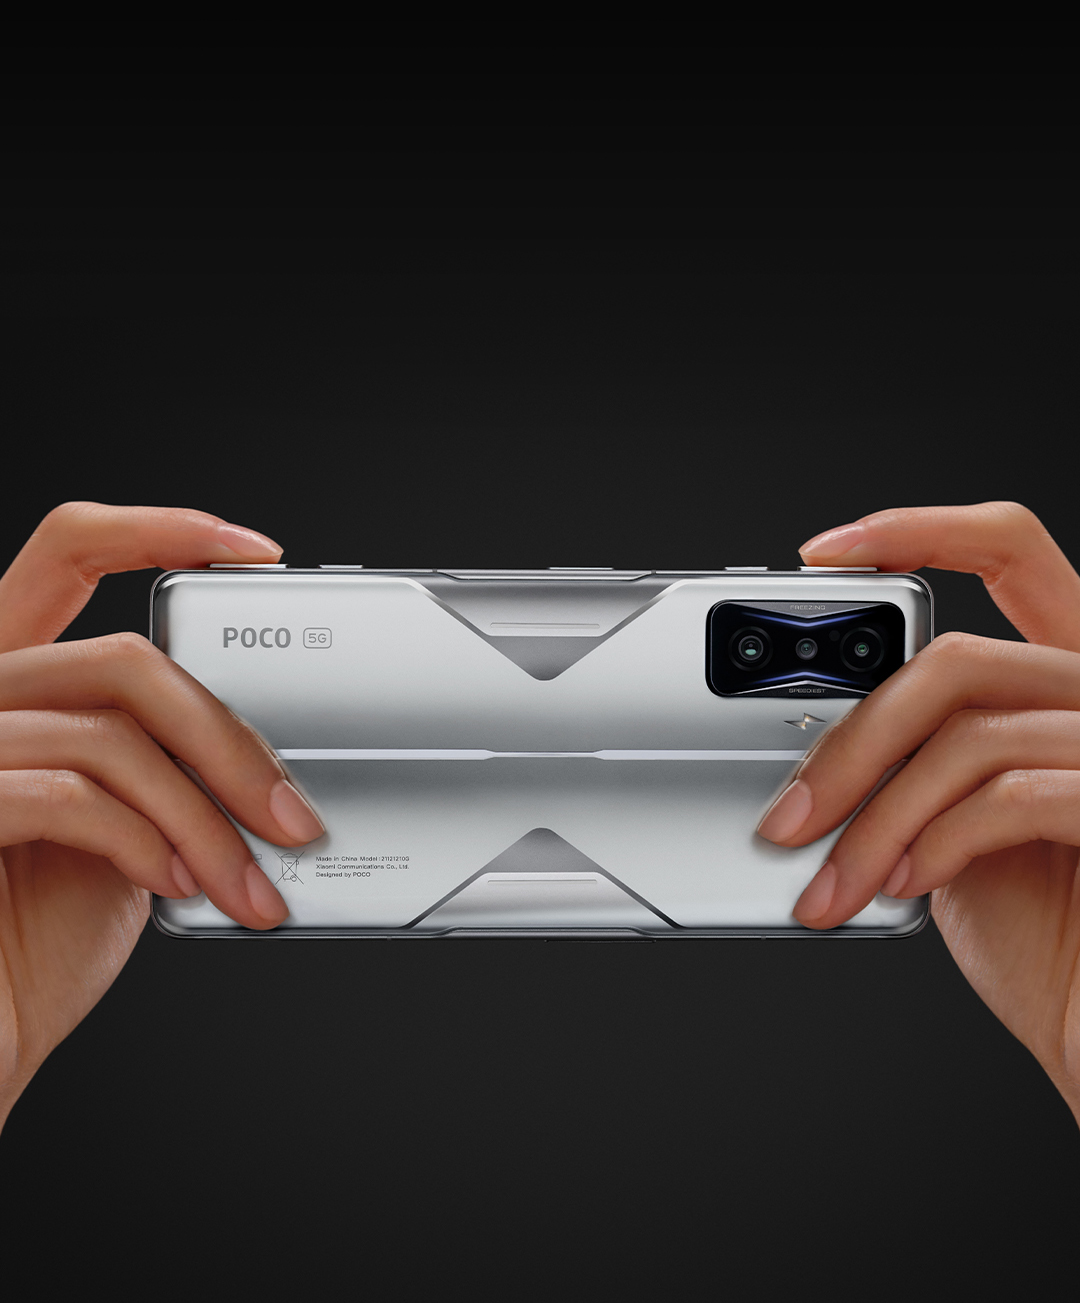 POCO F4 GT | Xiaomi Japan